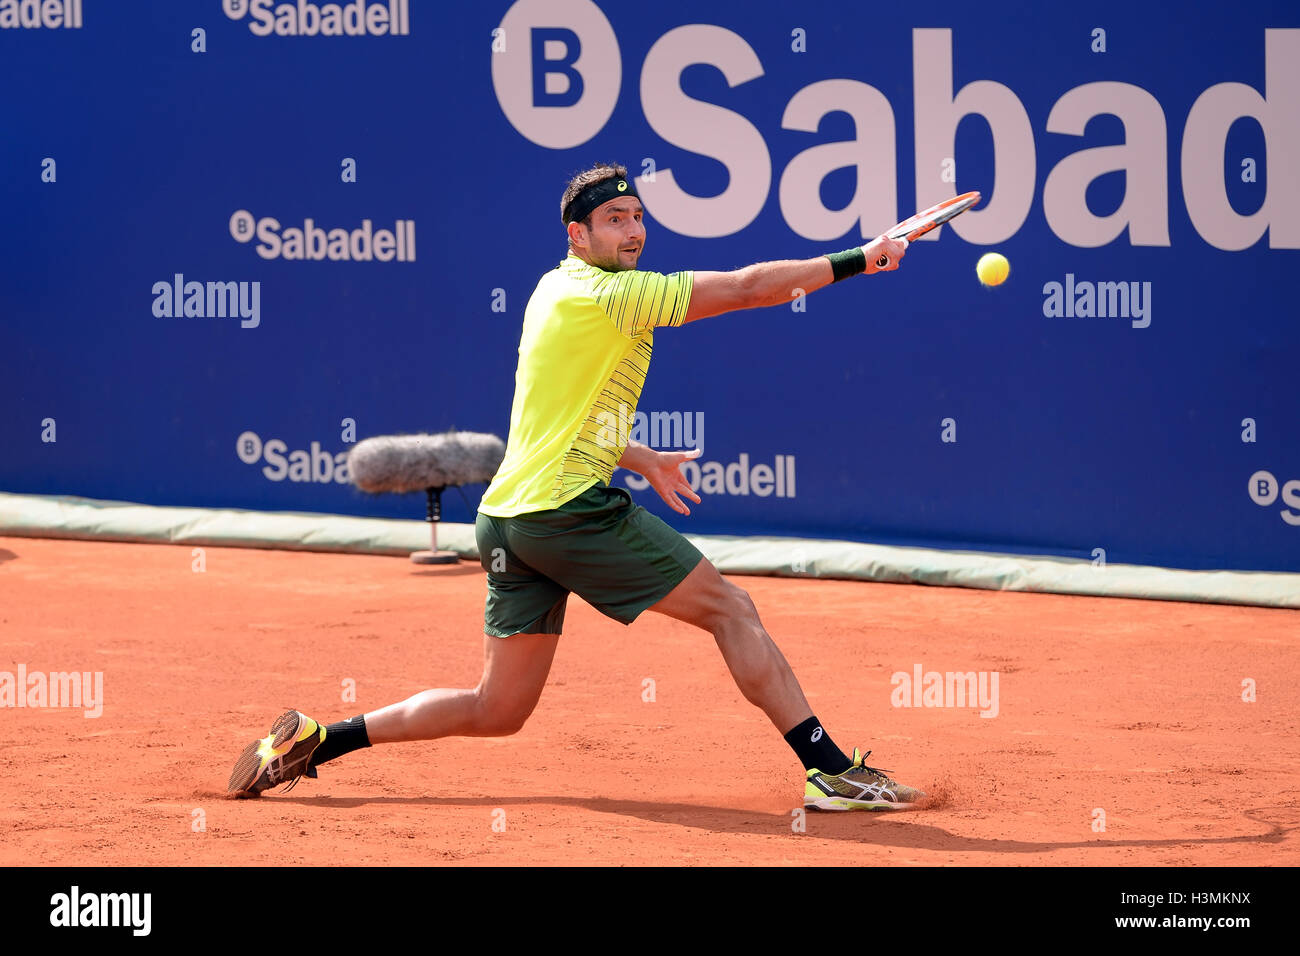 BARCELONA - APR 20: Marinko Matosevic (tennis player from Australia) plays at the ATP Barcelona Open. Stock Photo